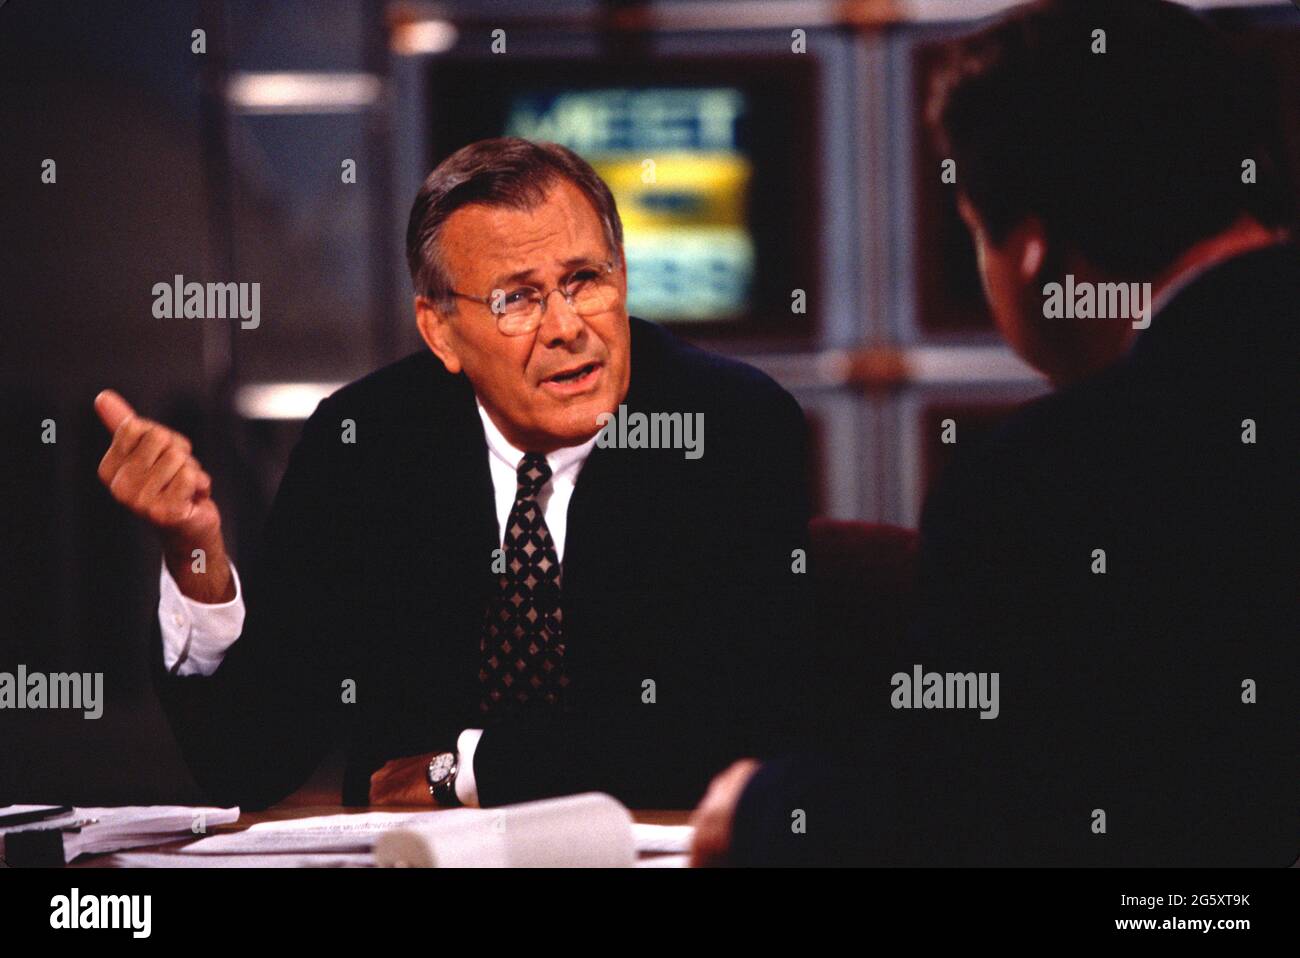 US Secretary of Defense Donald Rumsfeld appears on NBC Show 'Meet the Press' in Washington, DC. Stock Photo